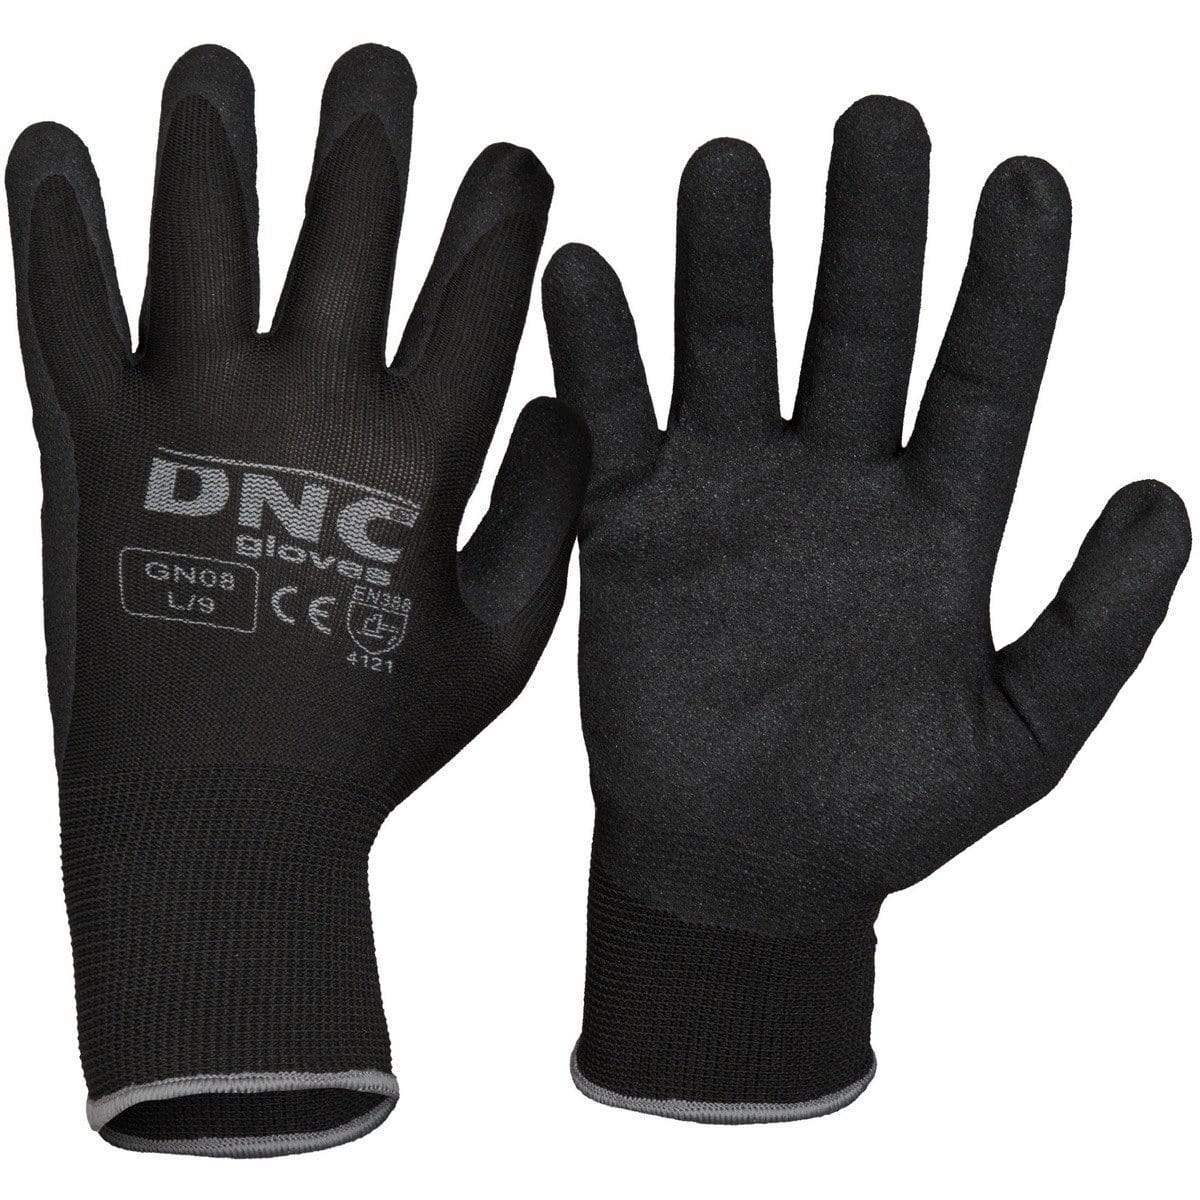 Dnc Workwear Nitrile Sandy Finish - GN08 PPE DNC Workwear Black/Black S/7 